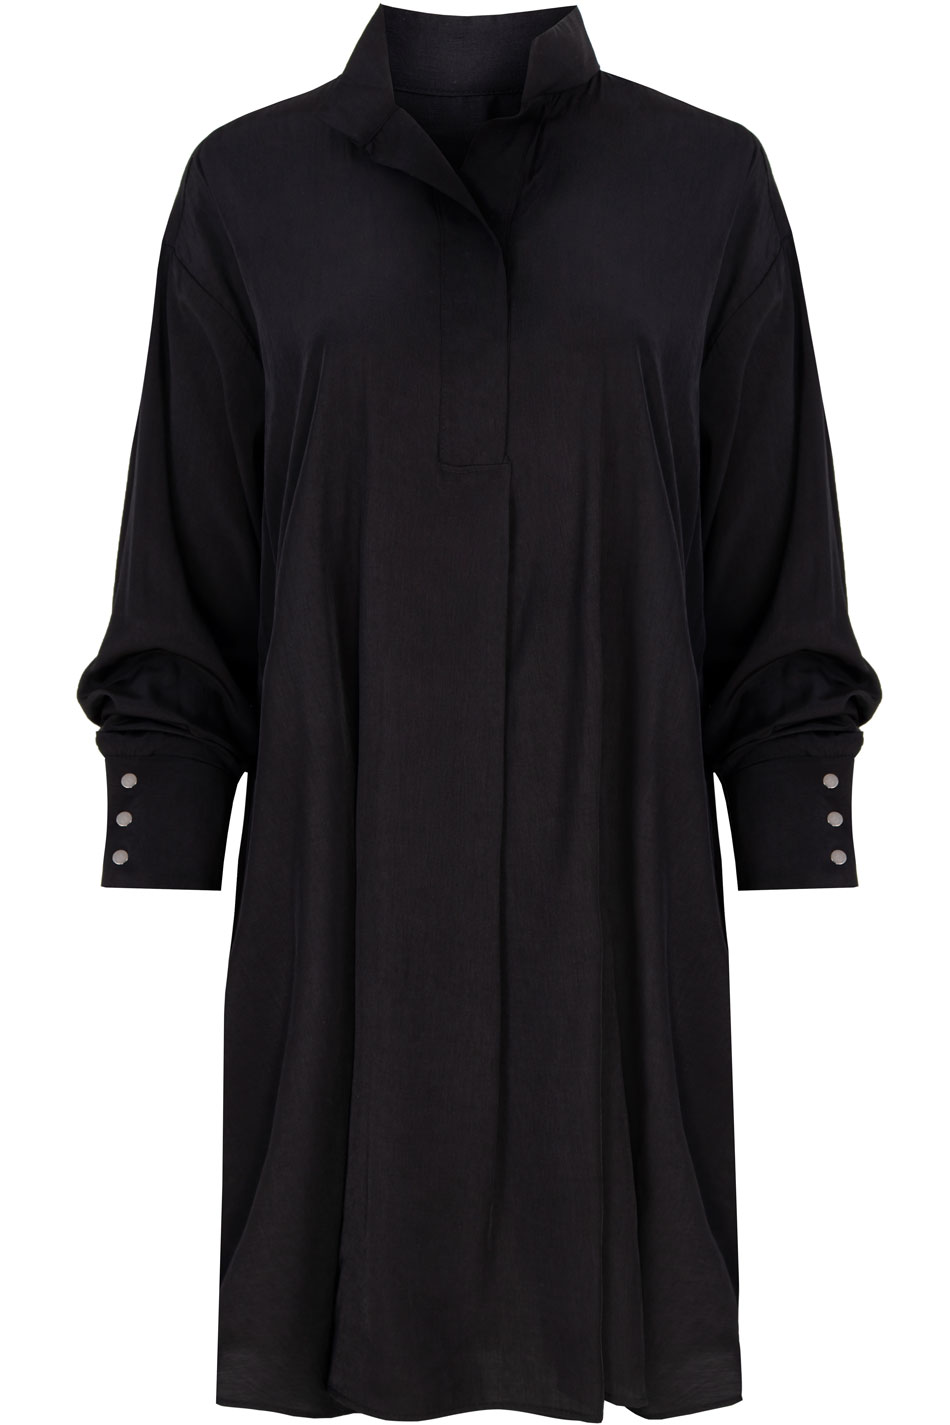 Koszulo-sukienka oversize czarna